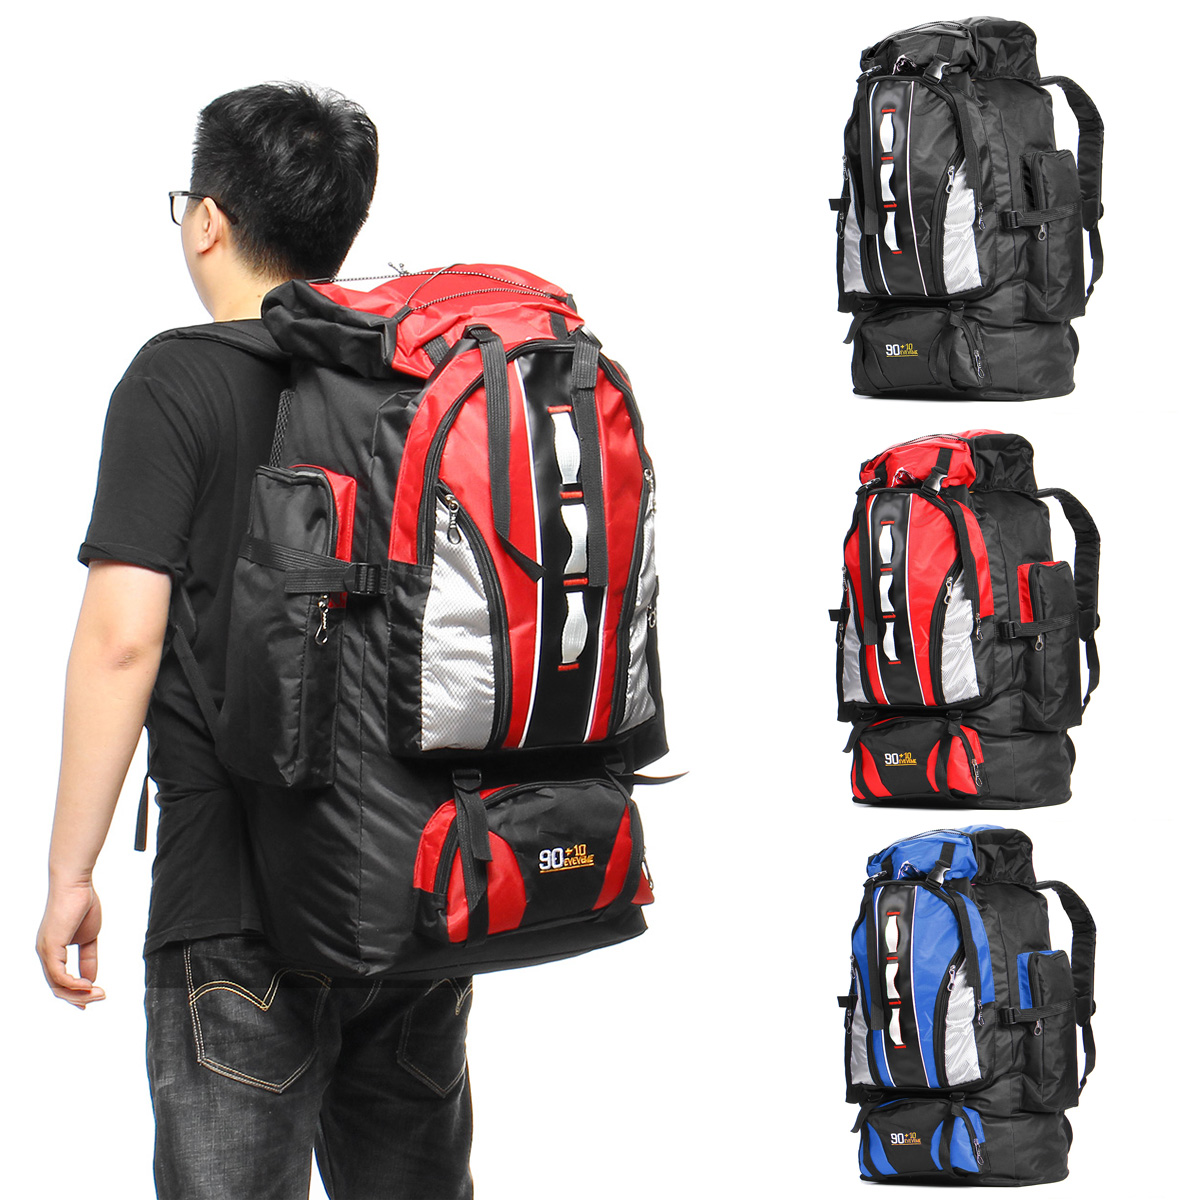 

90L Waterproof Outdoor Sport Hiking Camping Rucksack Bag Luggage Travel Backpack